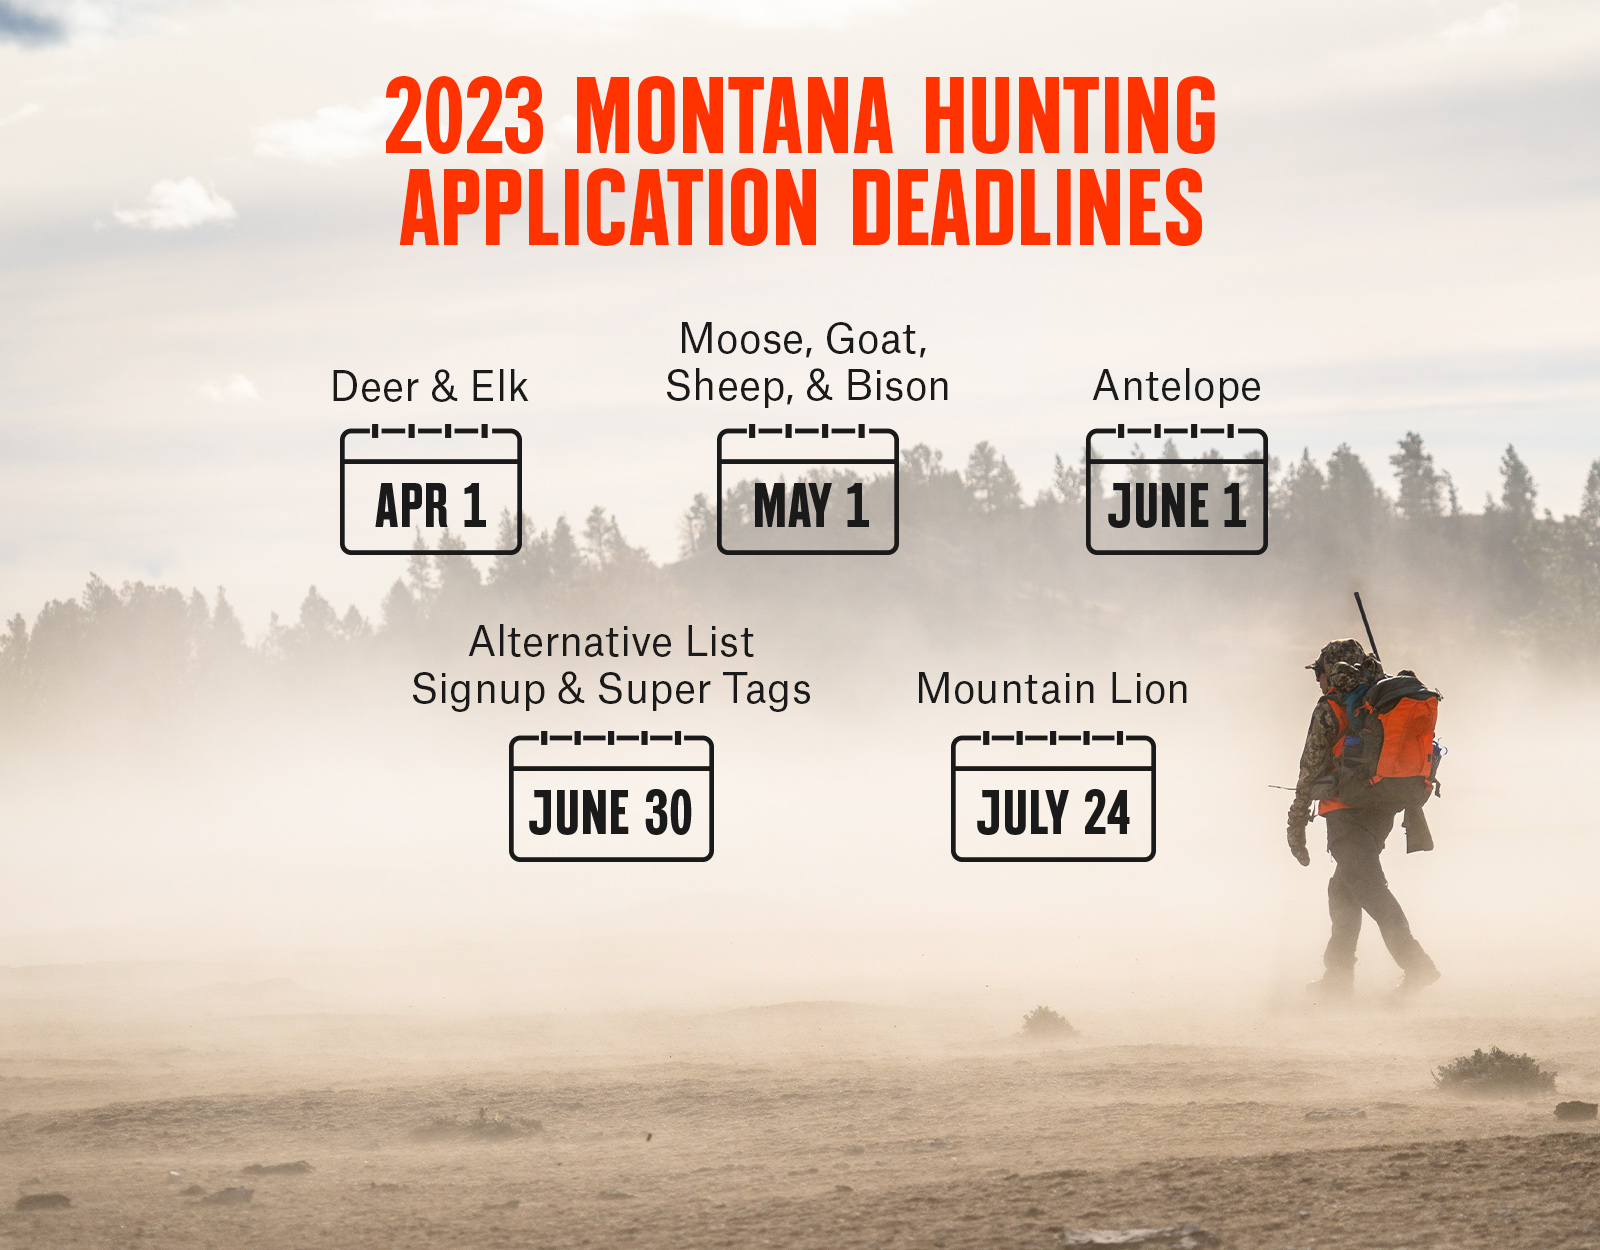 Montana hunting application deadlines